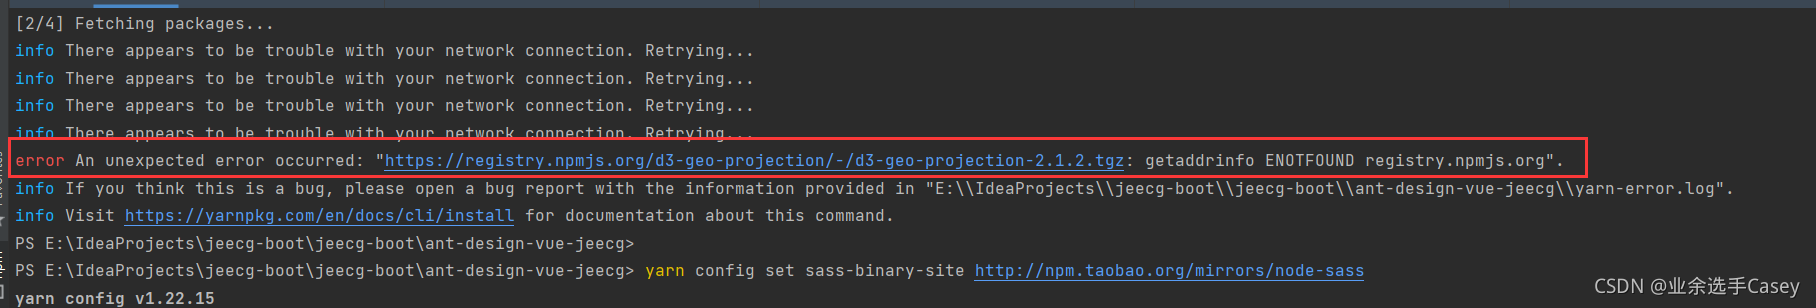 error An unexpected error occurred “httpsregistry.npmjs.orgd3-geo-proje